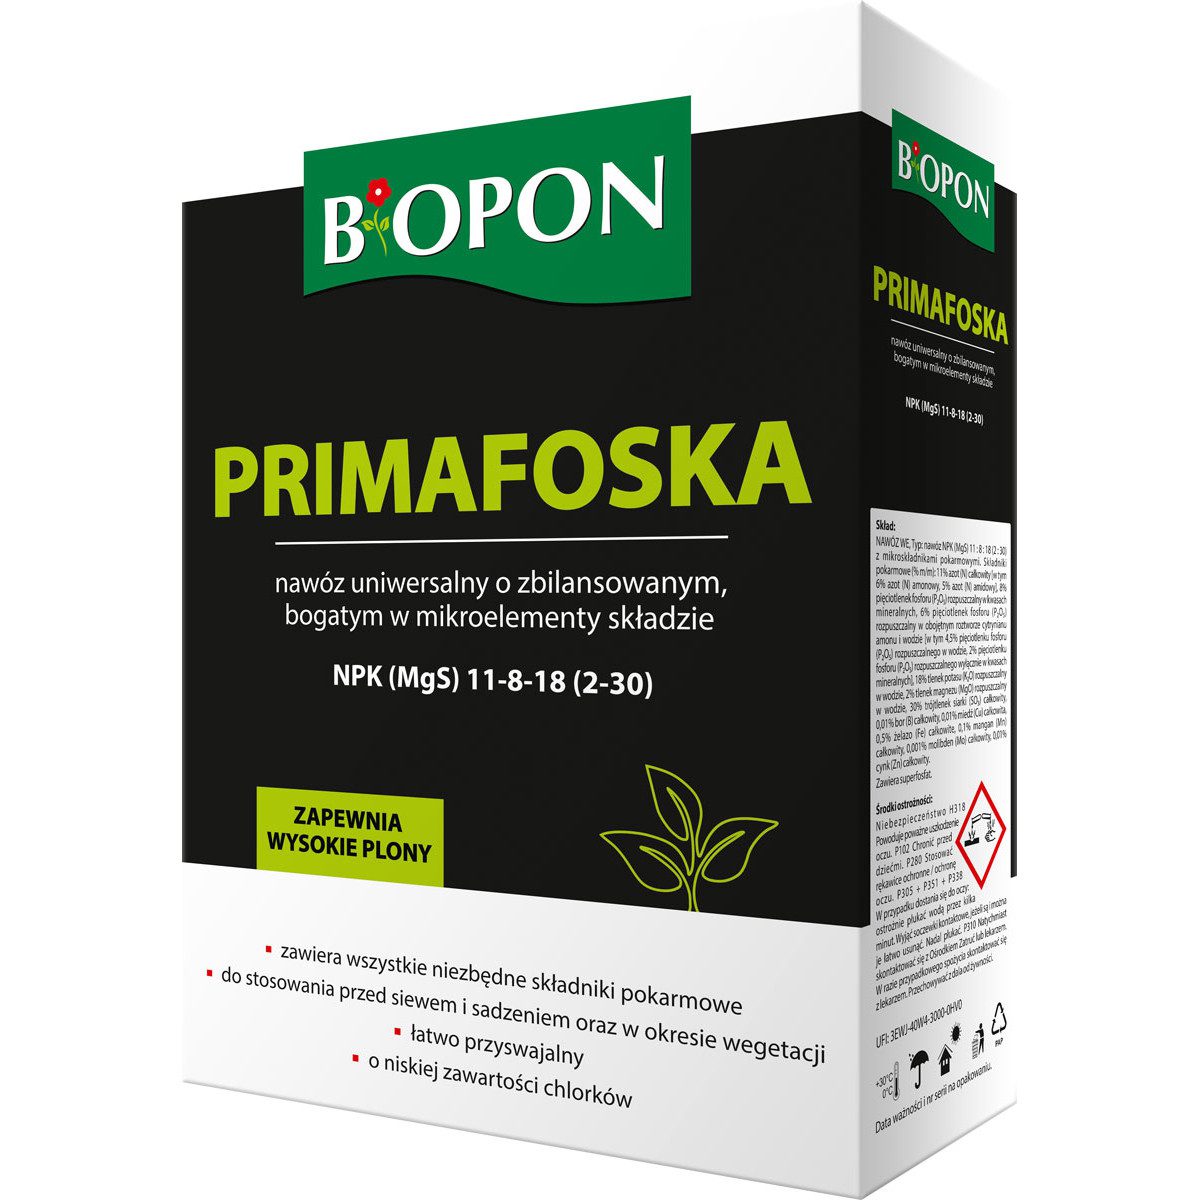 Biopon Primafoska